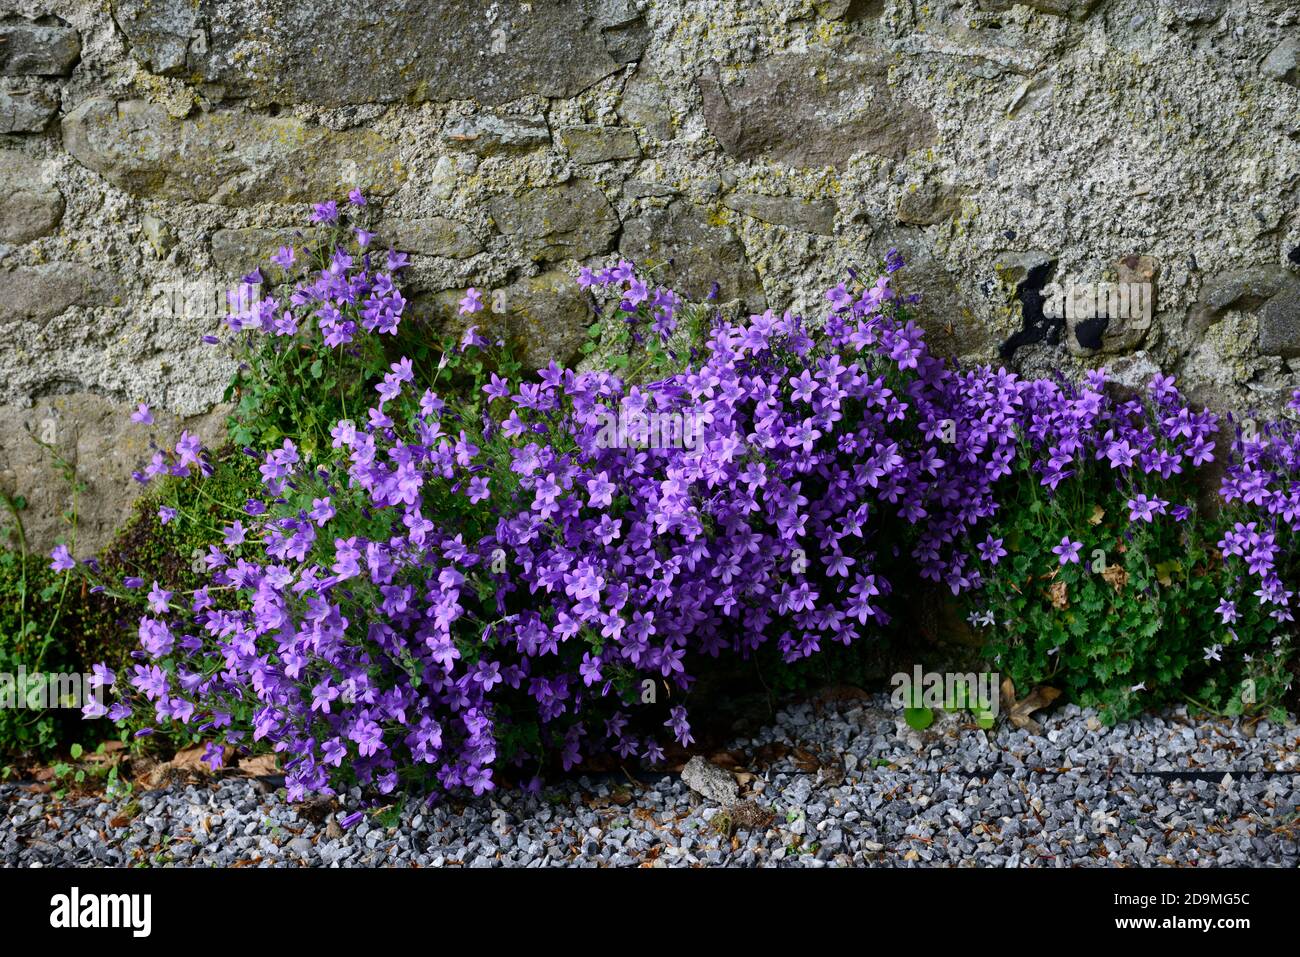 Campanula portenschlagiana,wall bellflower,mound-forming evergreen perennial,deep purple flowers,Dalmatian bellflower, Adria bellflower,purple flower, Stock Photo